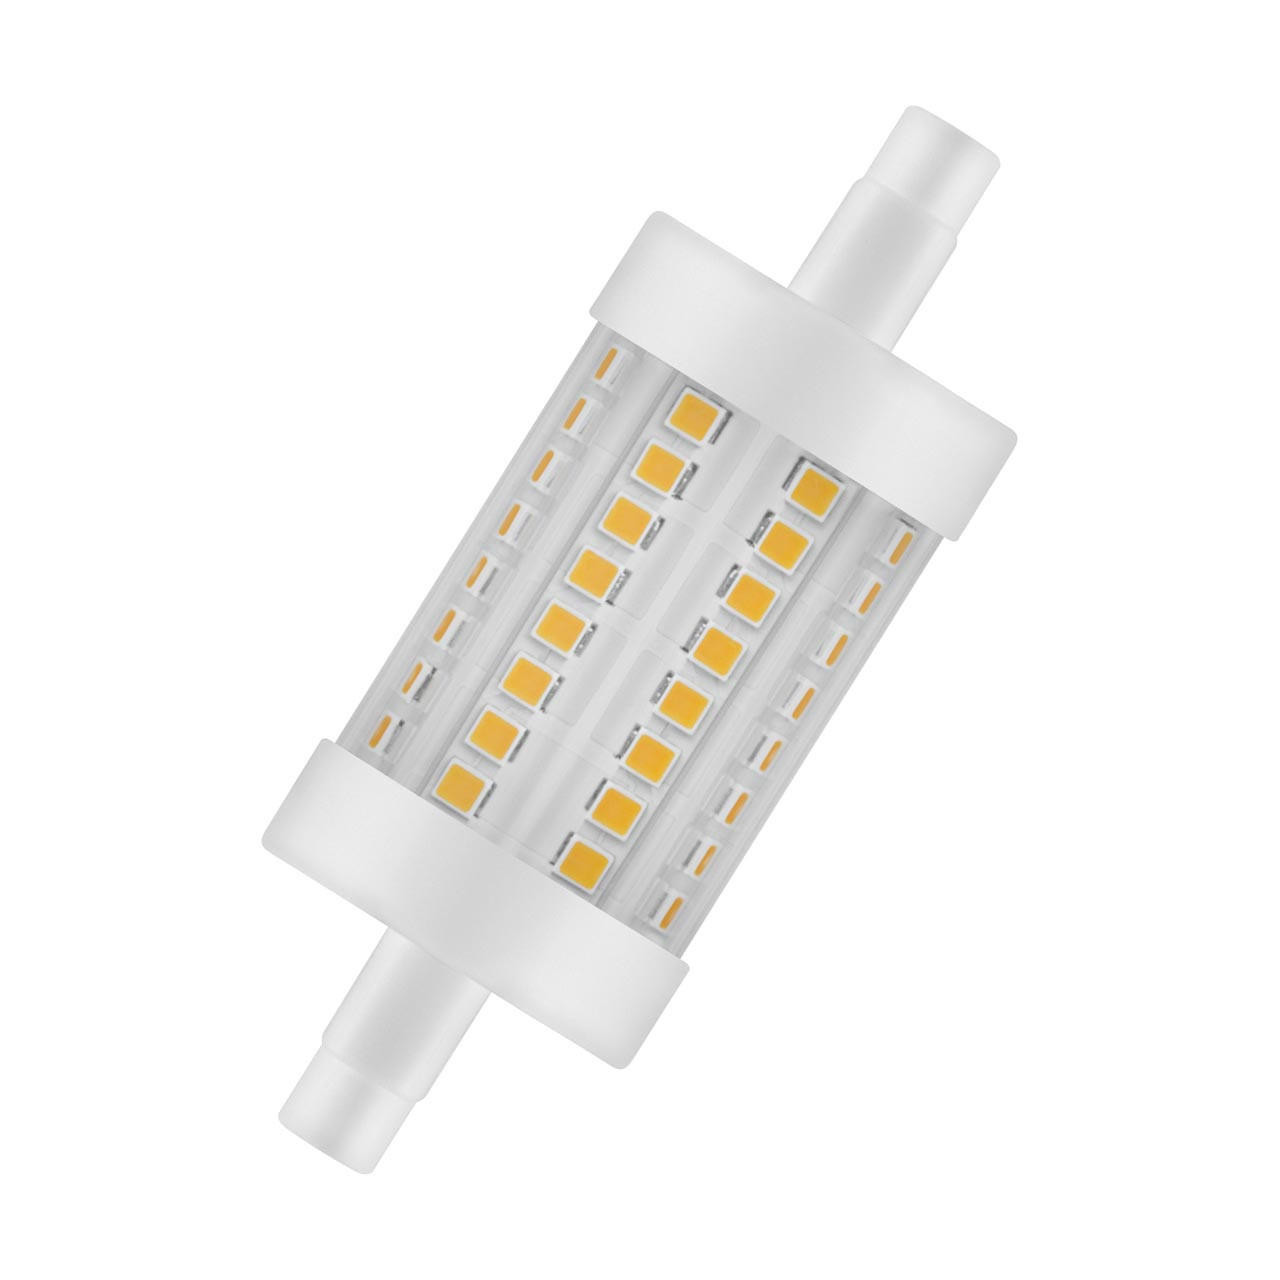 R7s Halogen Bulb 78mm 150W Dimmable 220-240V Energy Saving Warm White  Linear Bulbs Floodlights Light Bulb